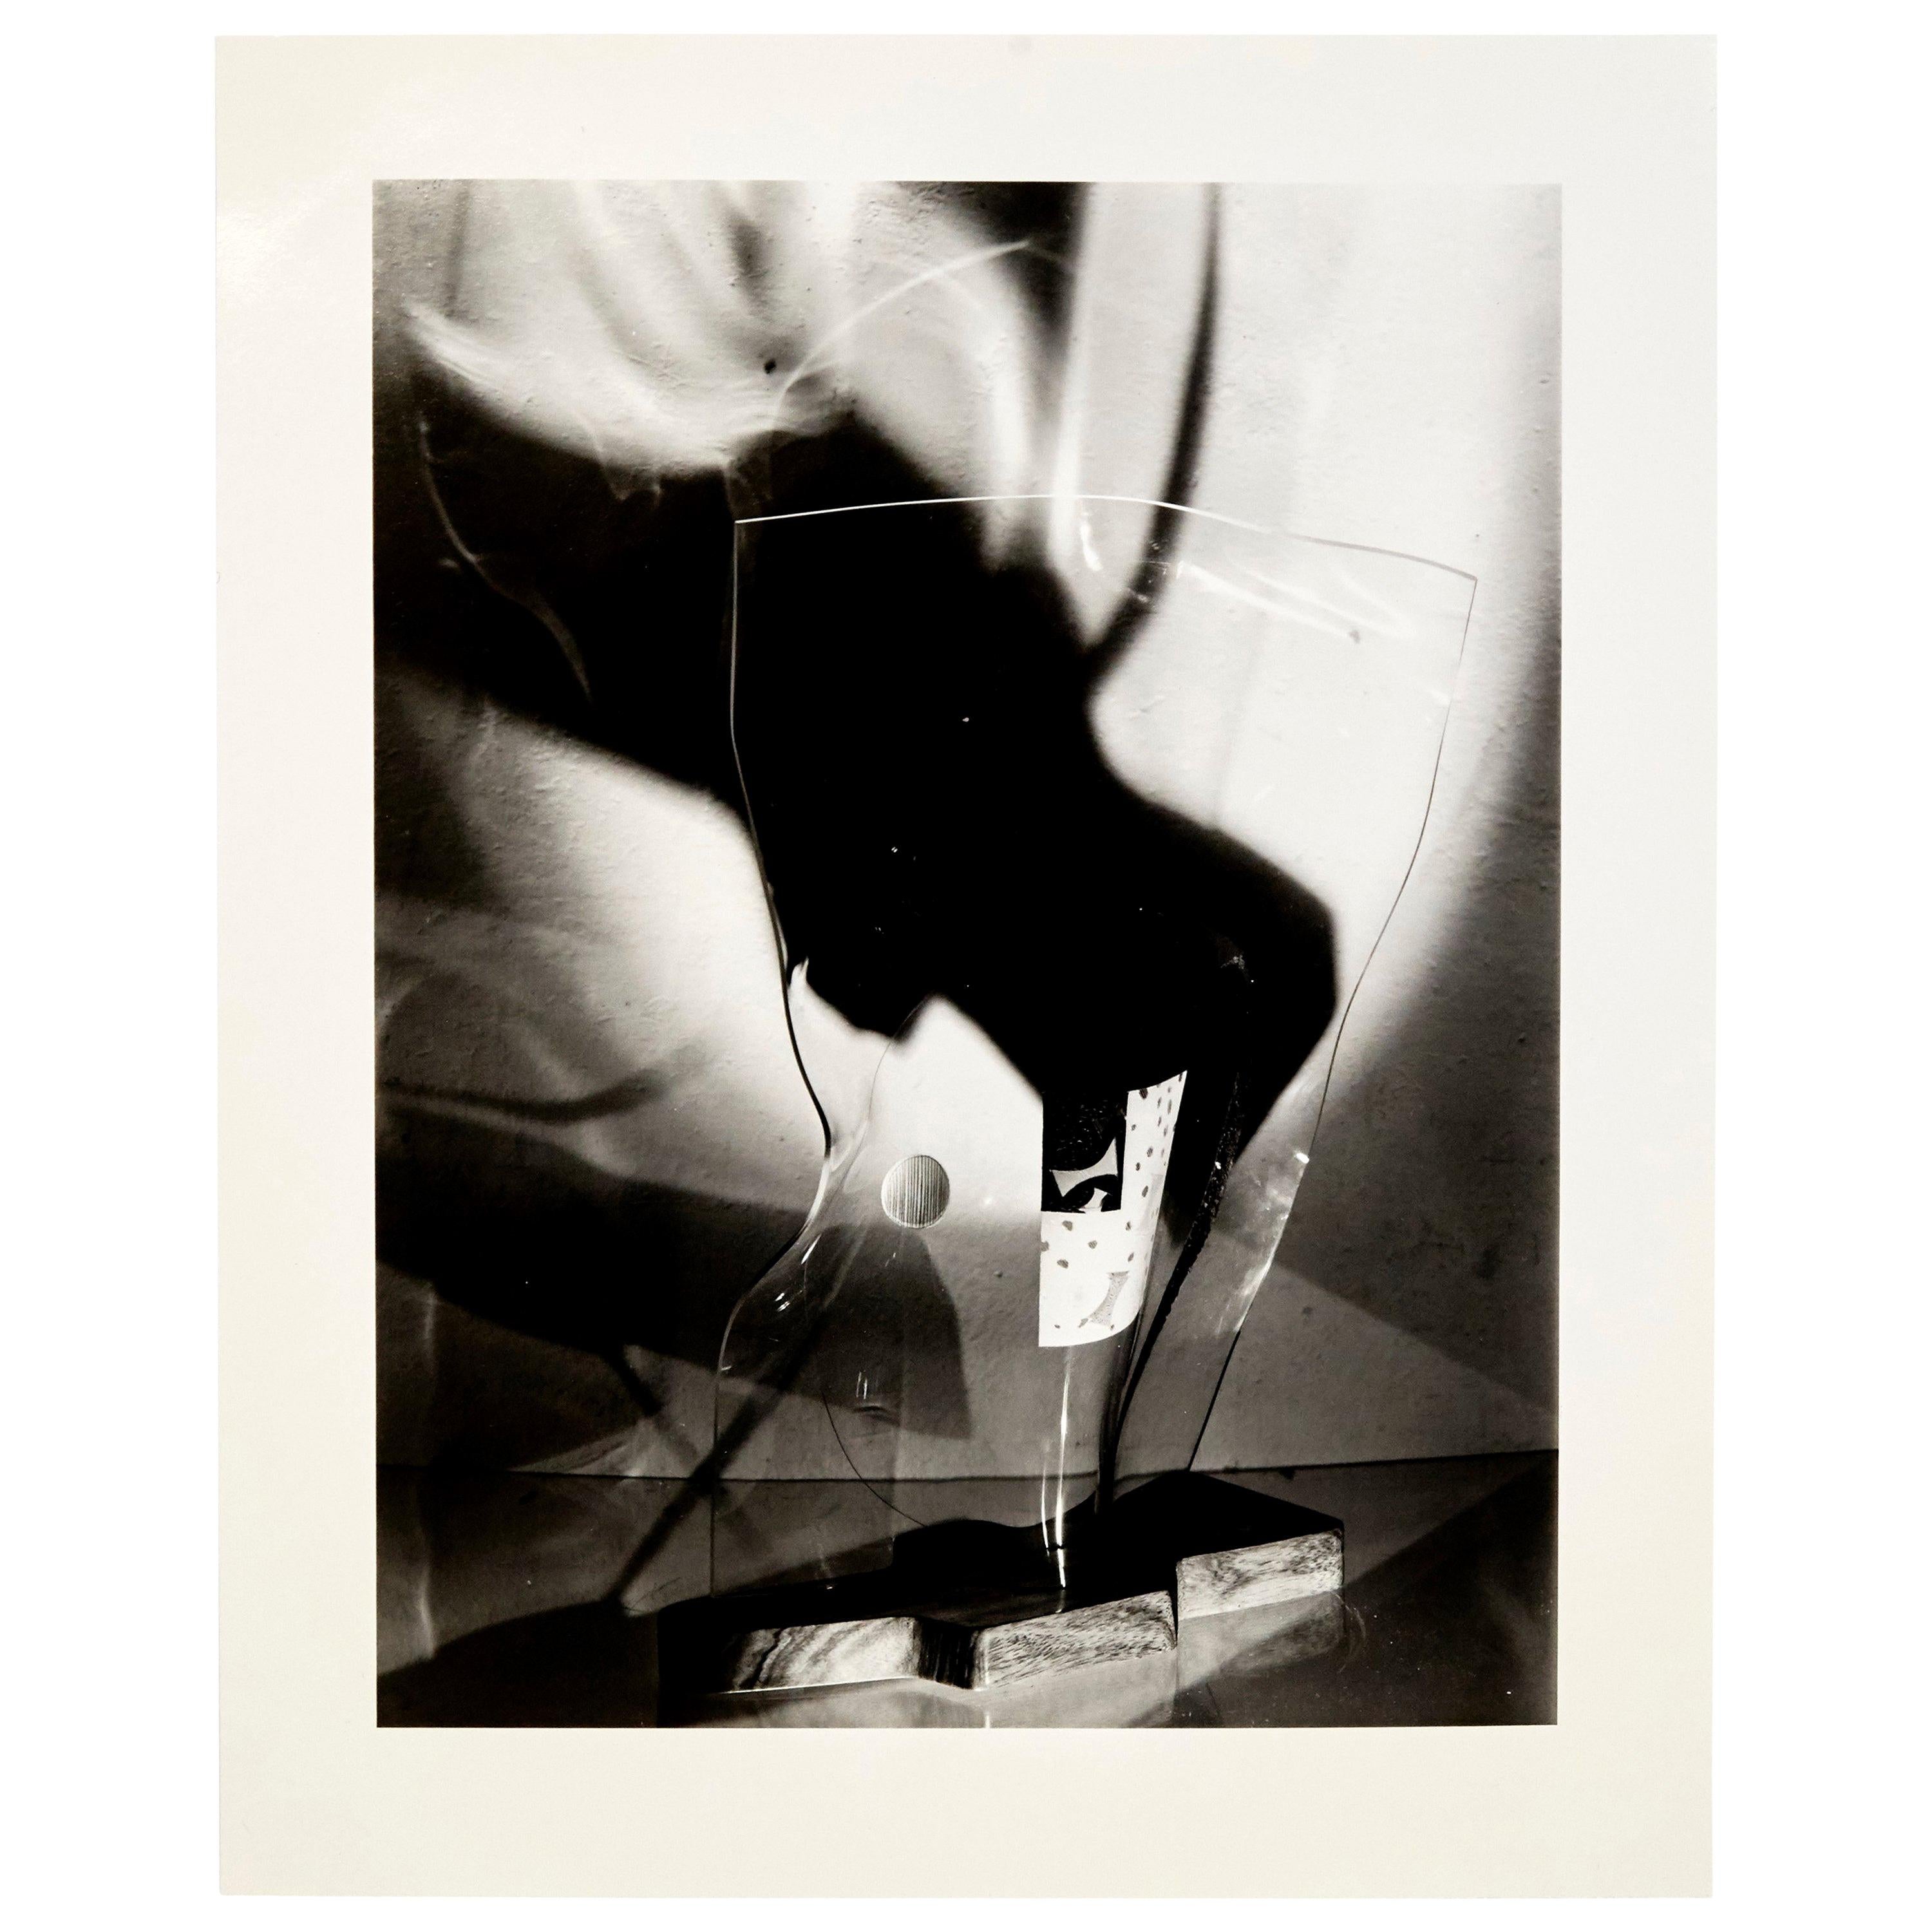 László Moholy-Nagy "Licht-Raum Modulationen" Photographie 3/6